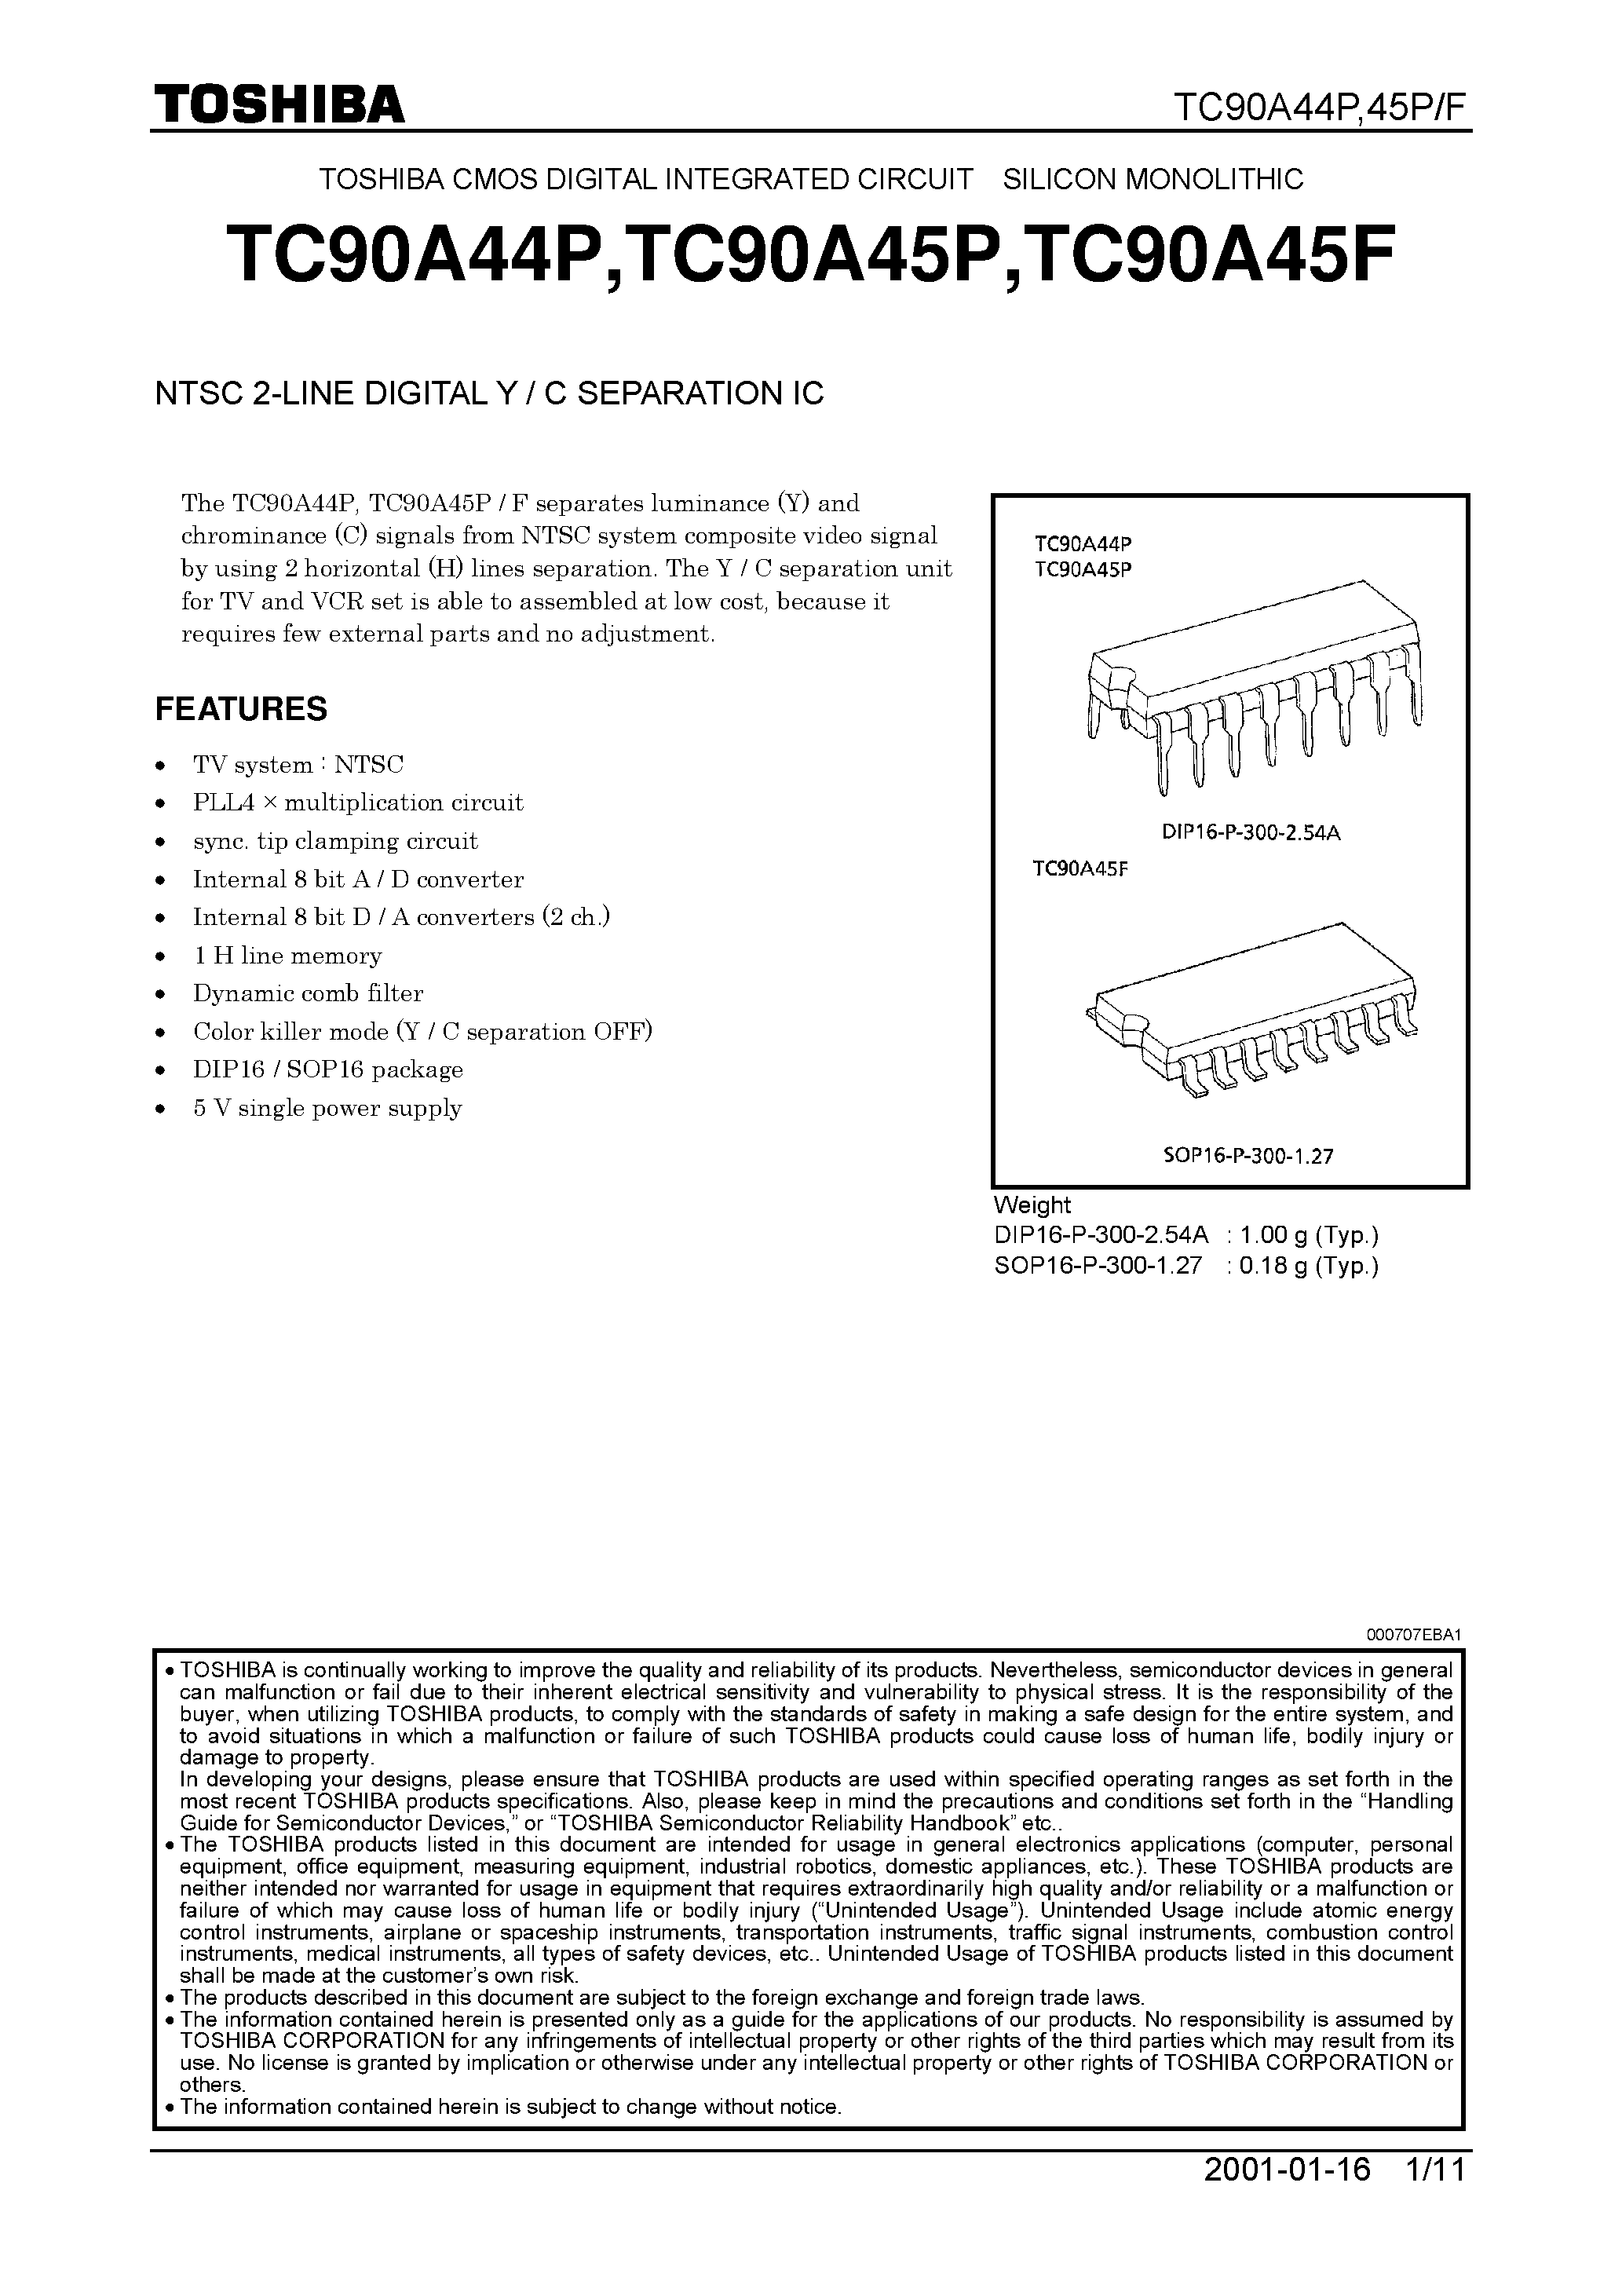 Datasheet TC90A44P - NTSC 2-LINE DIGITAL Y / C SEPARATION IC page 1